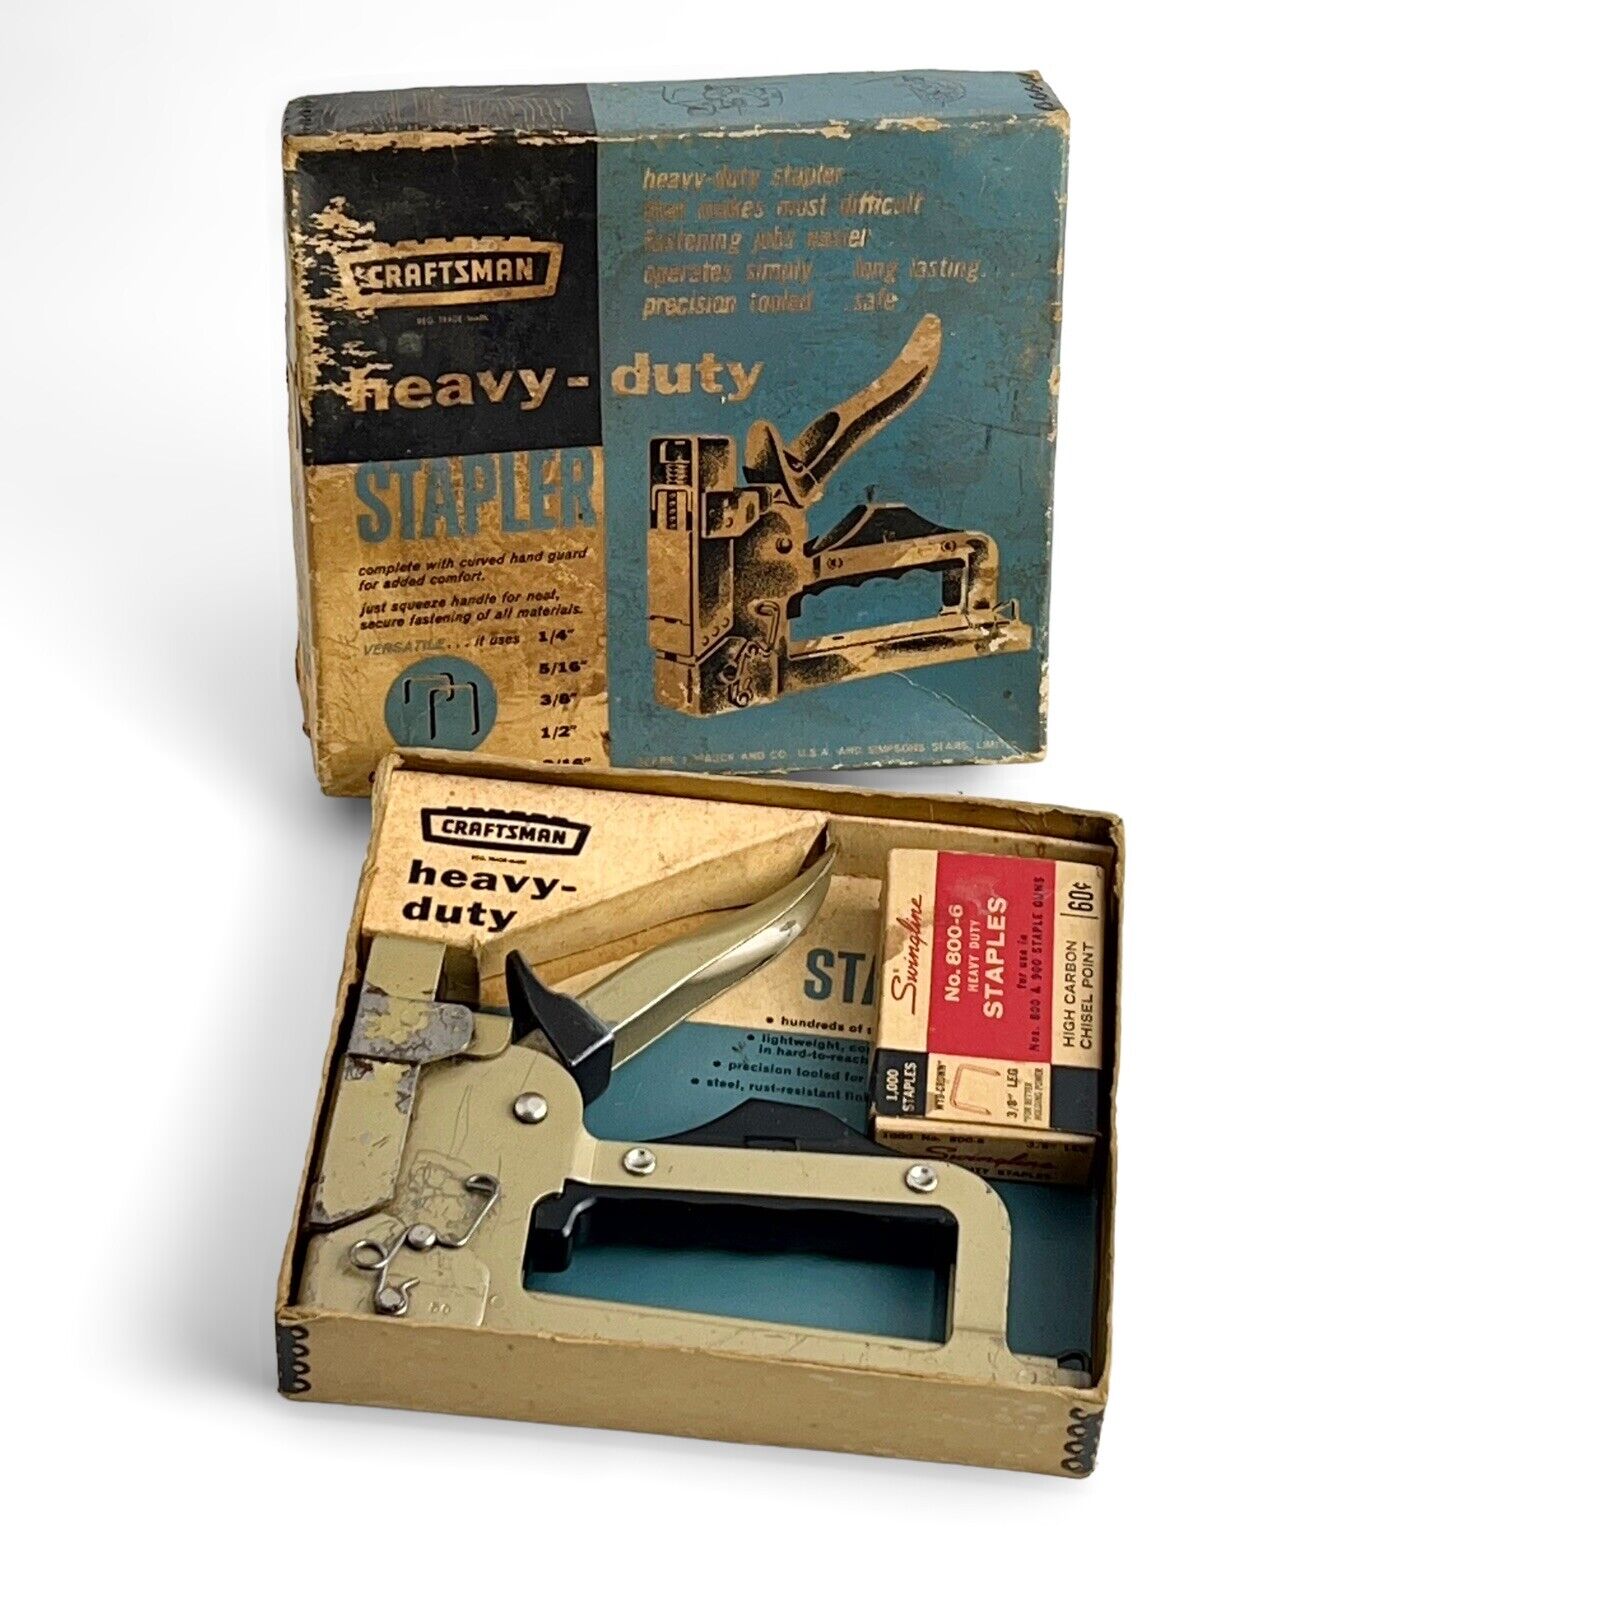 Vintage Craftsman Gun Tacker-Stapler Heavy Duty Sold By Sears + Vintage Staples